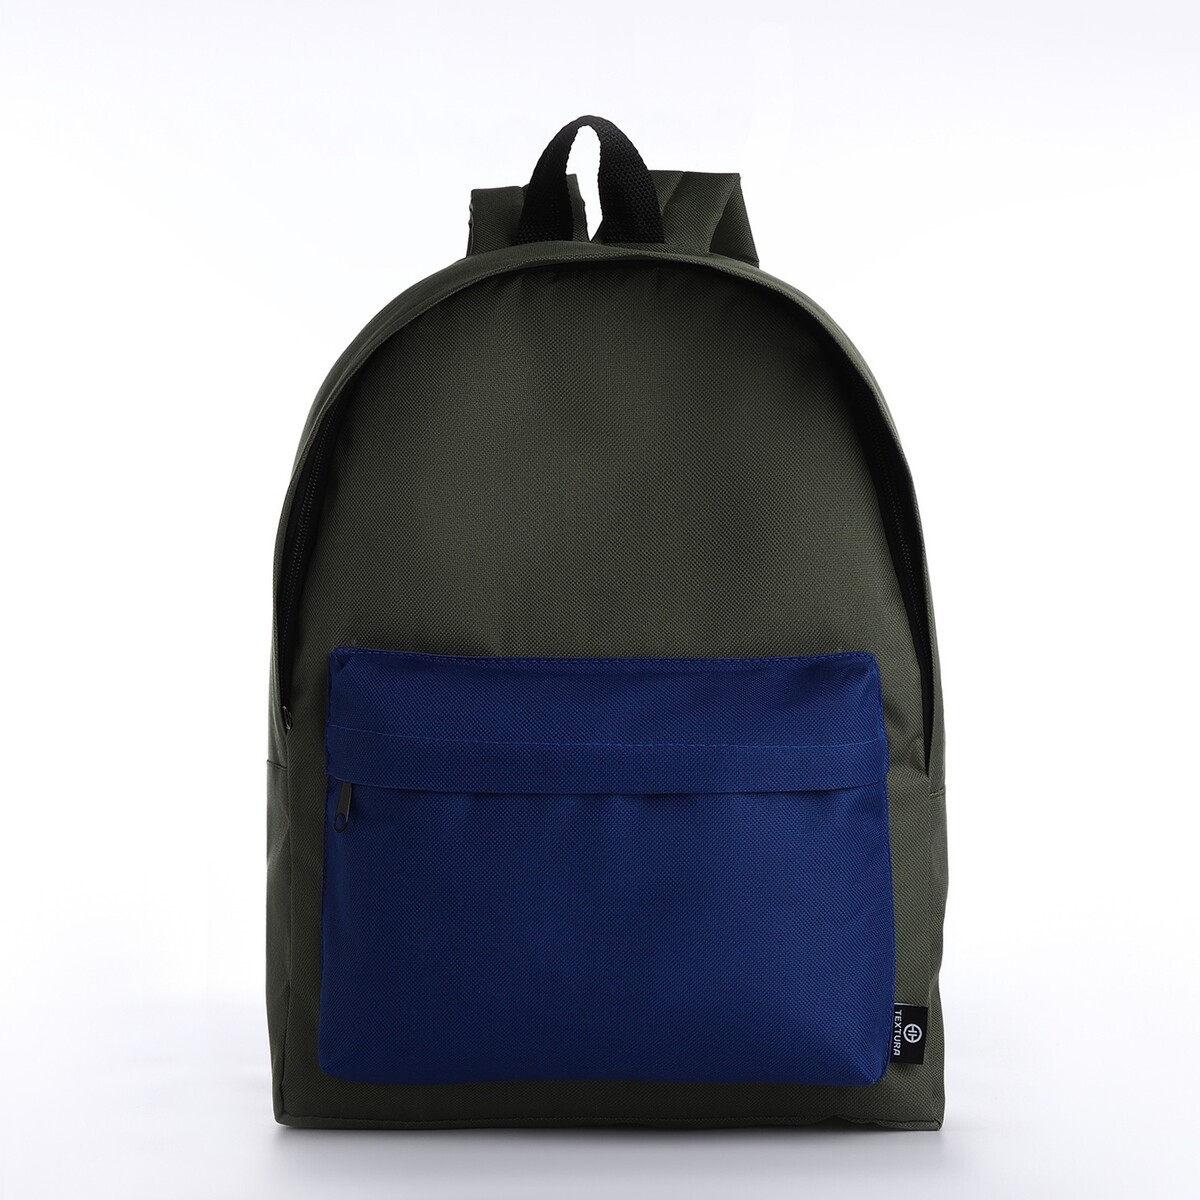 Спортивный рюкзак из текстиля на молнии textura, 20 литров, цвет хаки/синий спортивный рюкзак из текстиля на молнии textura 20 литров хаки